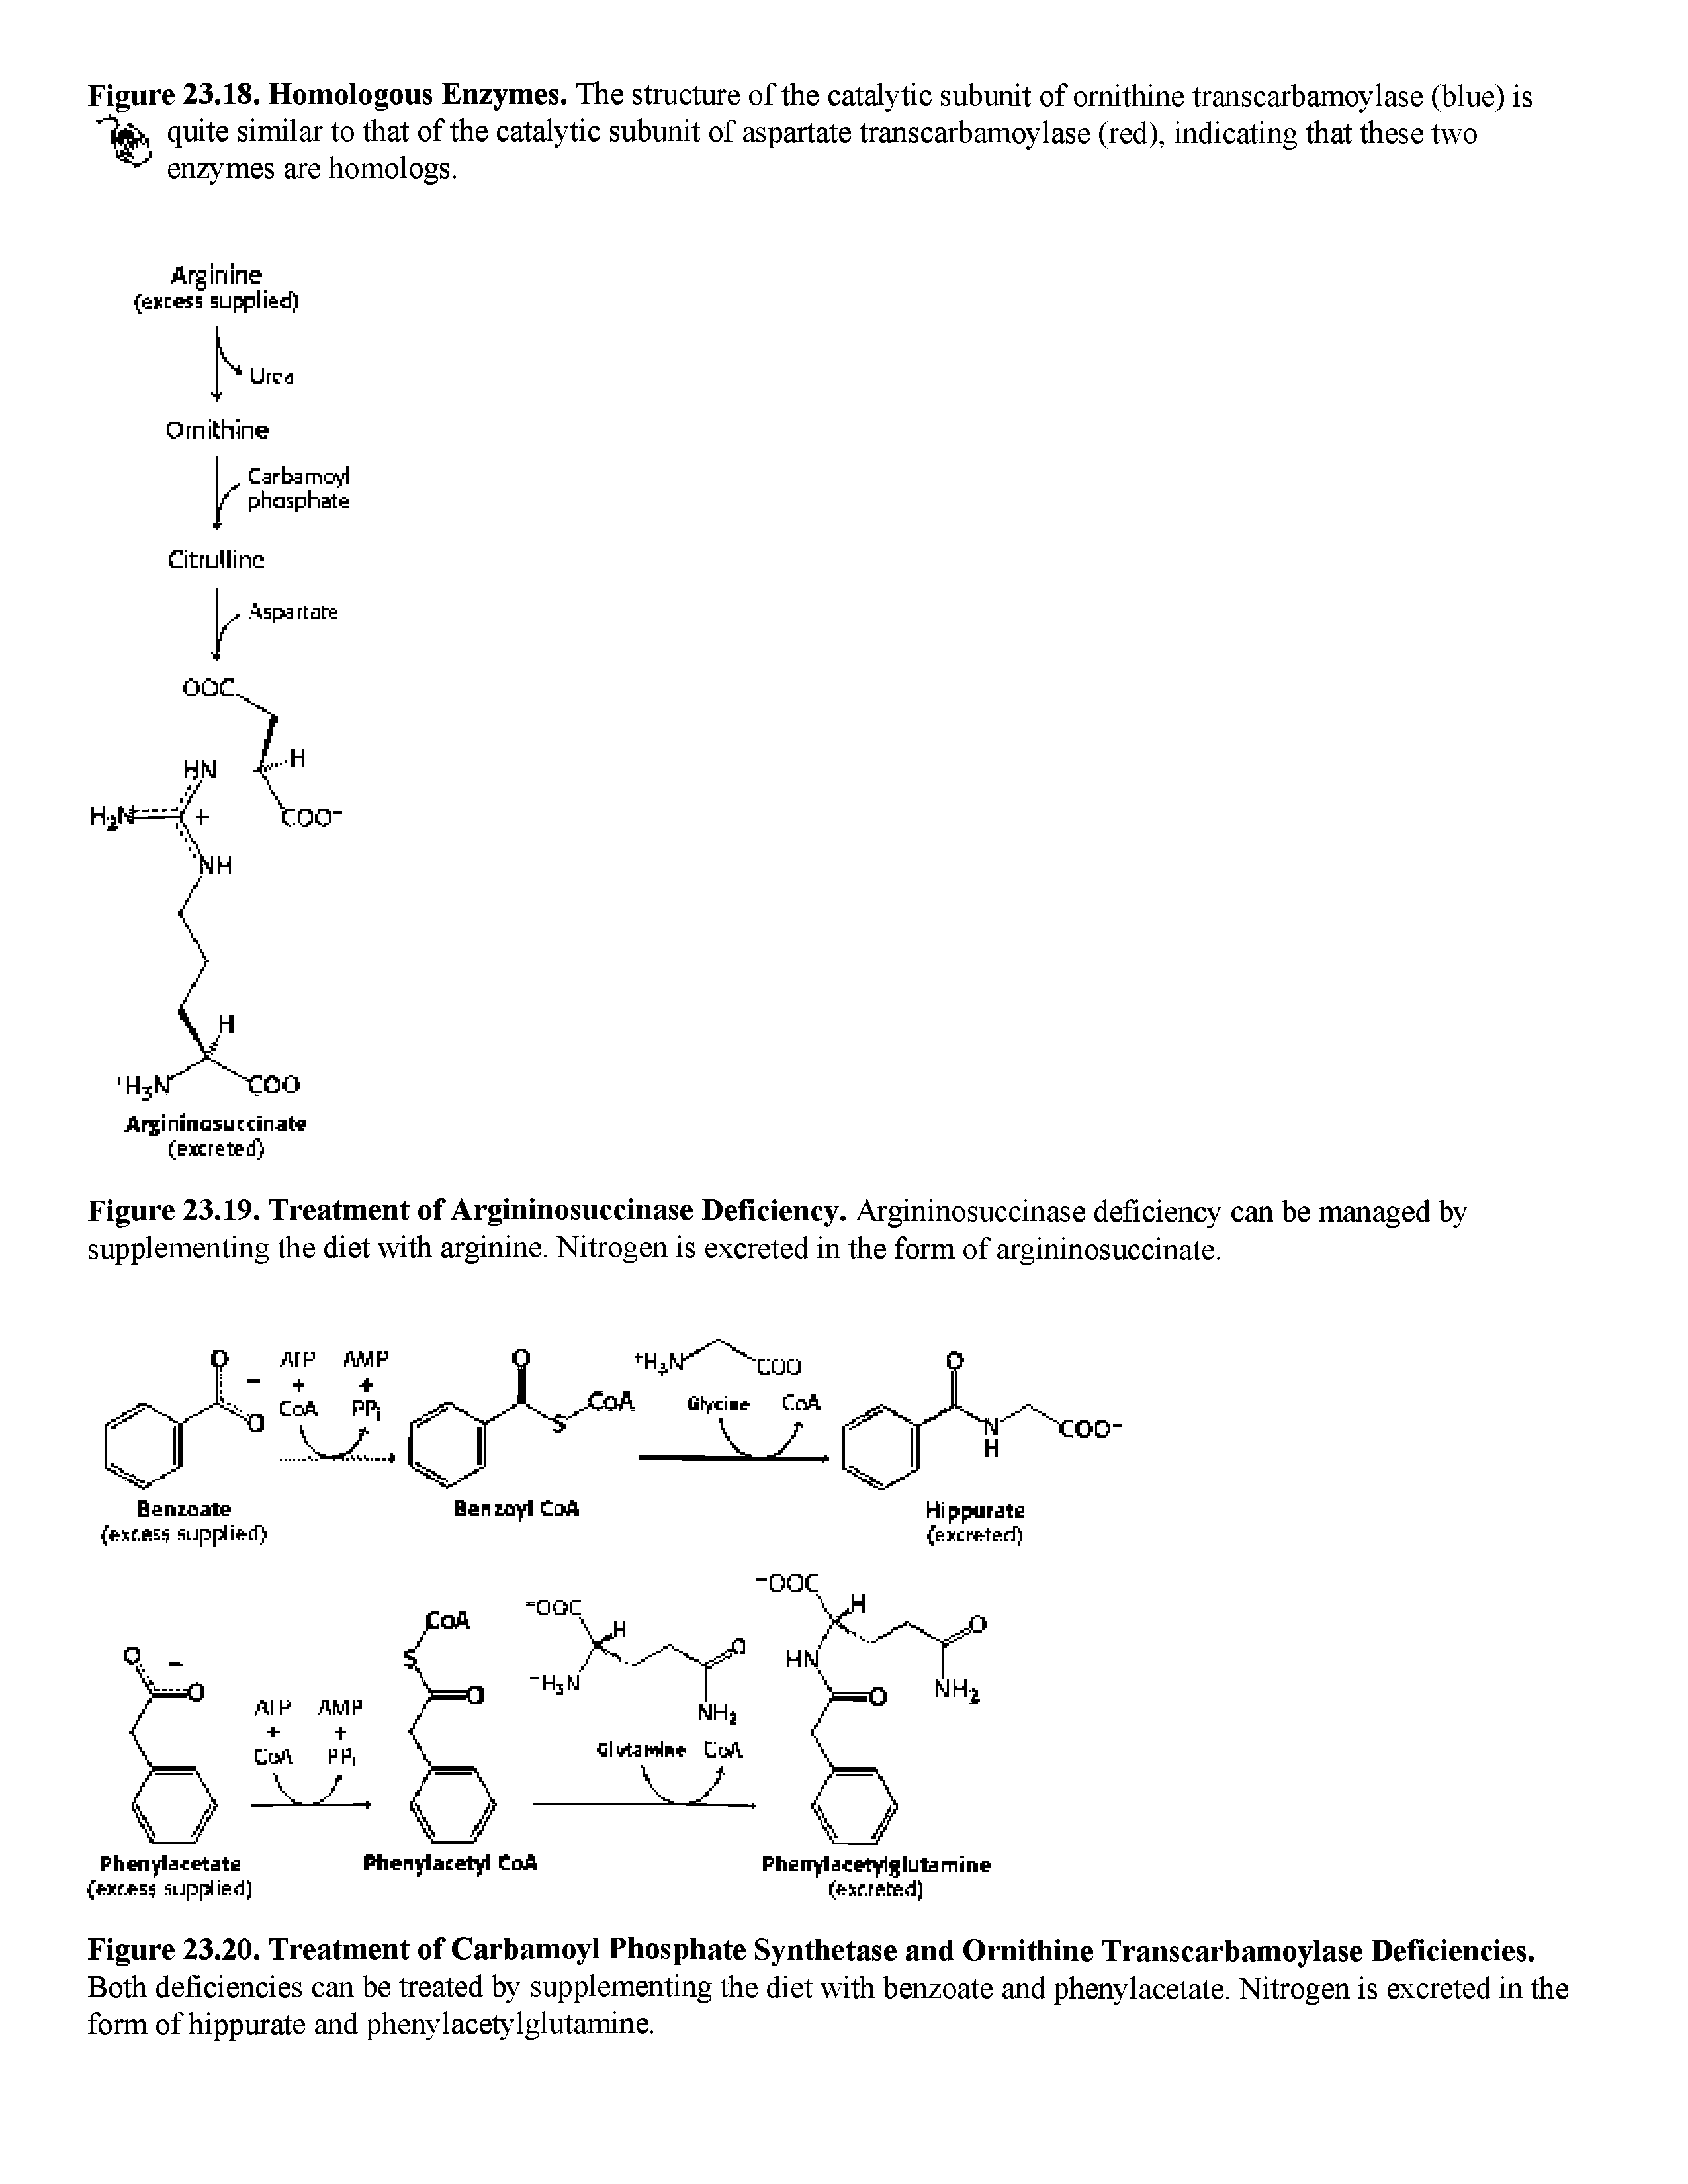 Figure 23.20. Treatment of Carbamoyl Phosphate Synthetase and Ornithine Transcarbamoylase Deficiencies.